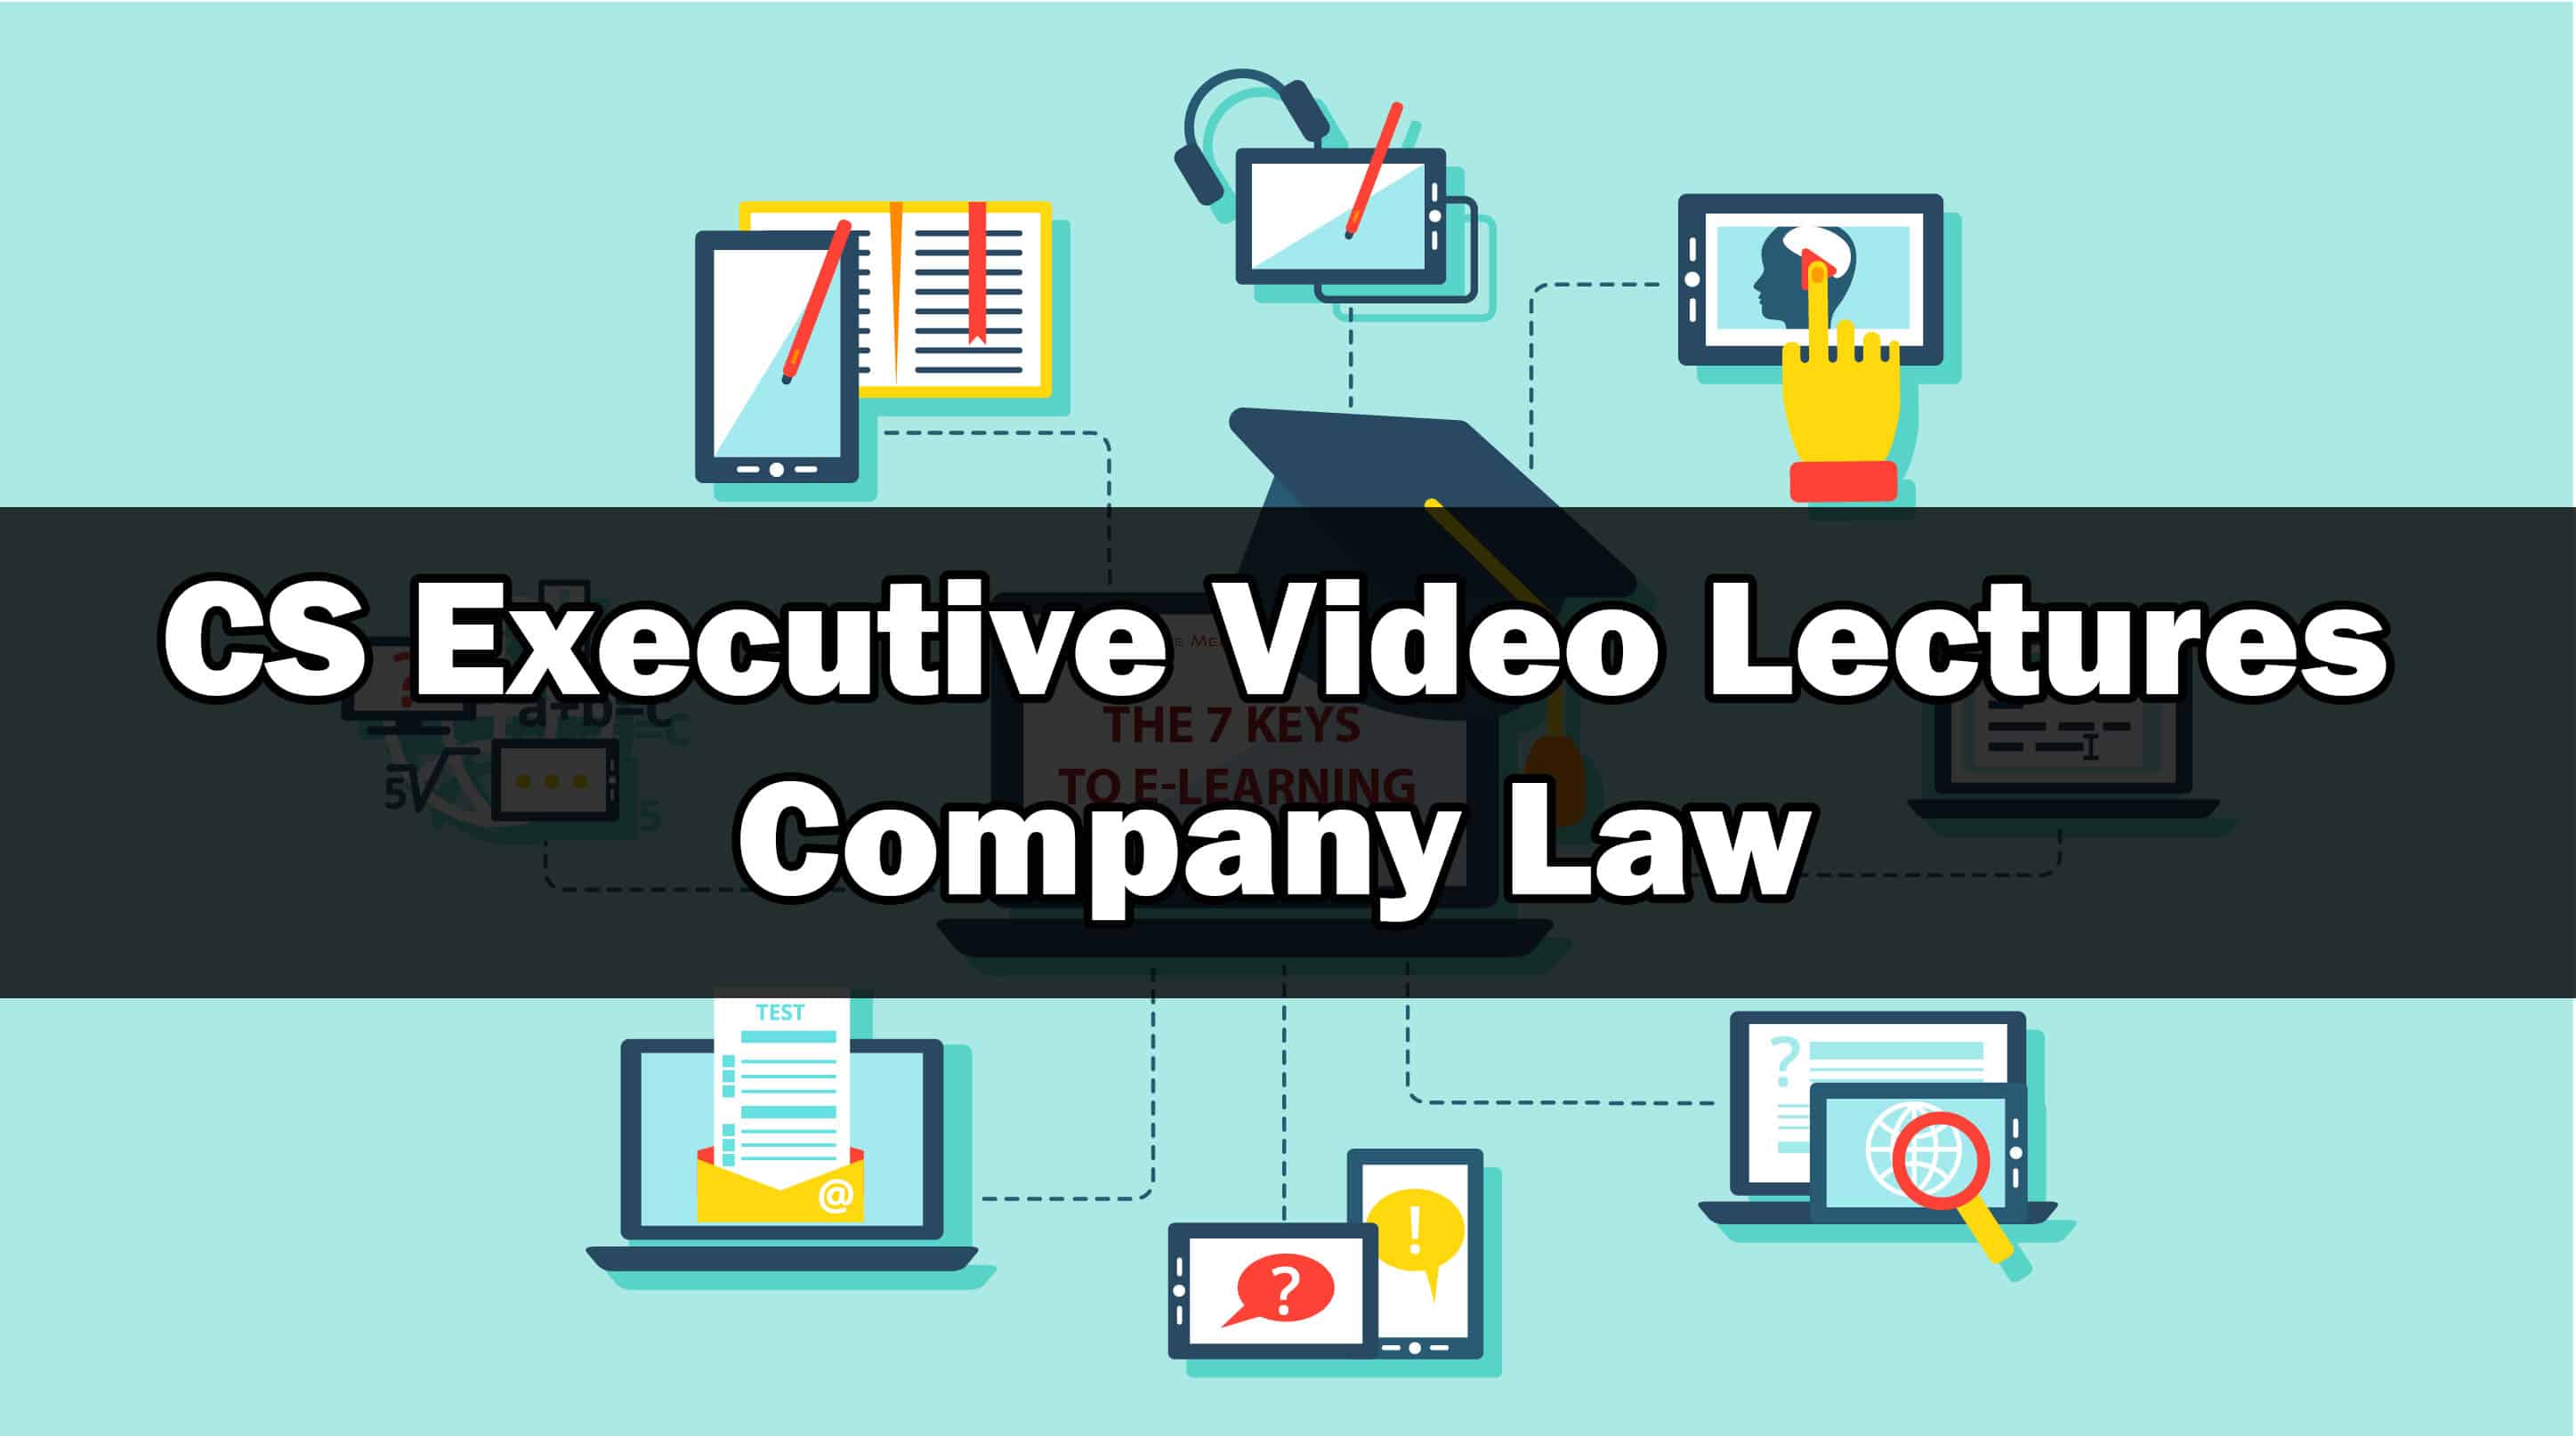 CS Executive Company Law Video Lecture